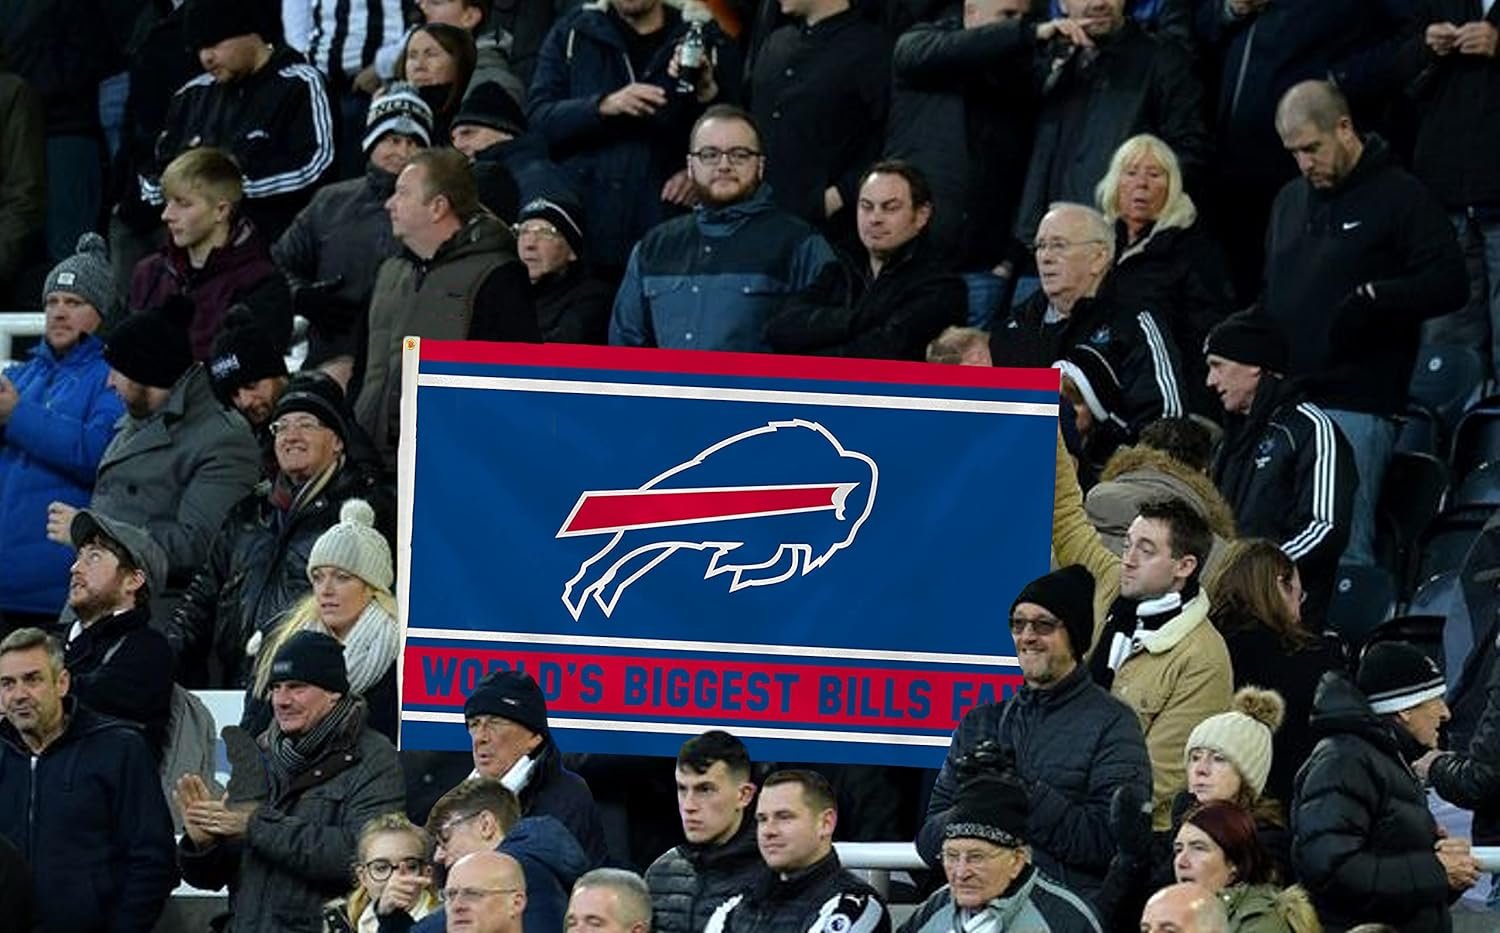 Buffalo Bills 3x5 Feet Flag Banner, World's Biggest Fan, Metal Grommets, Single Sided, Indoor or Outdoor Use